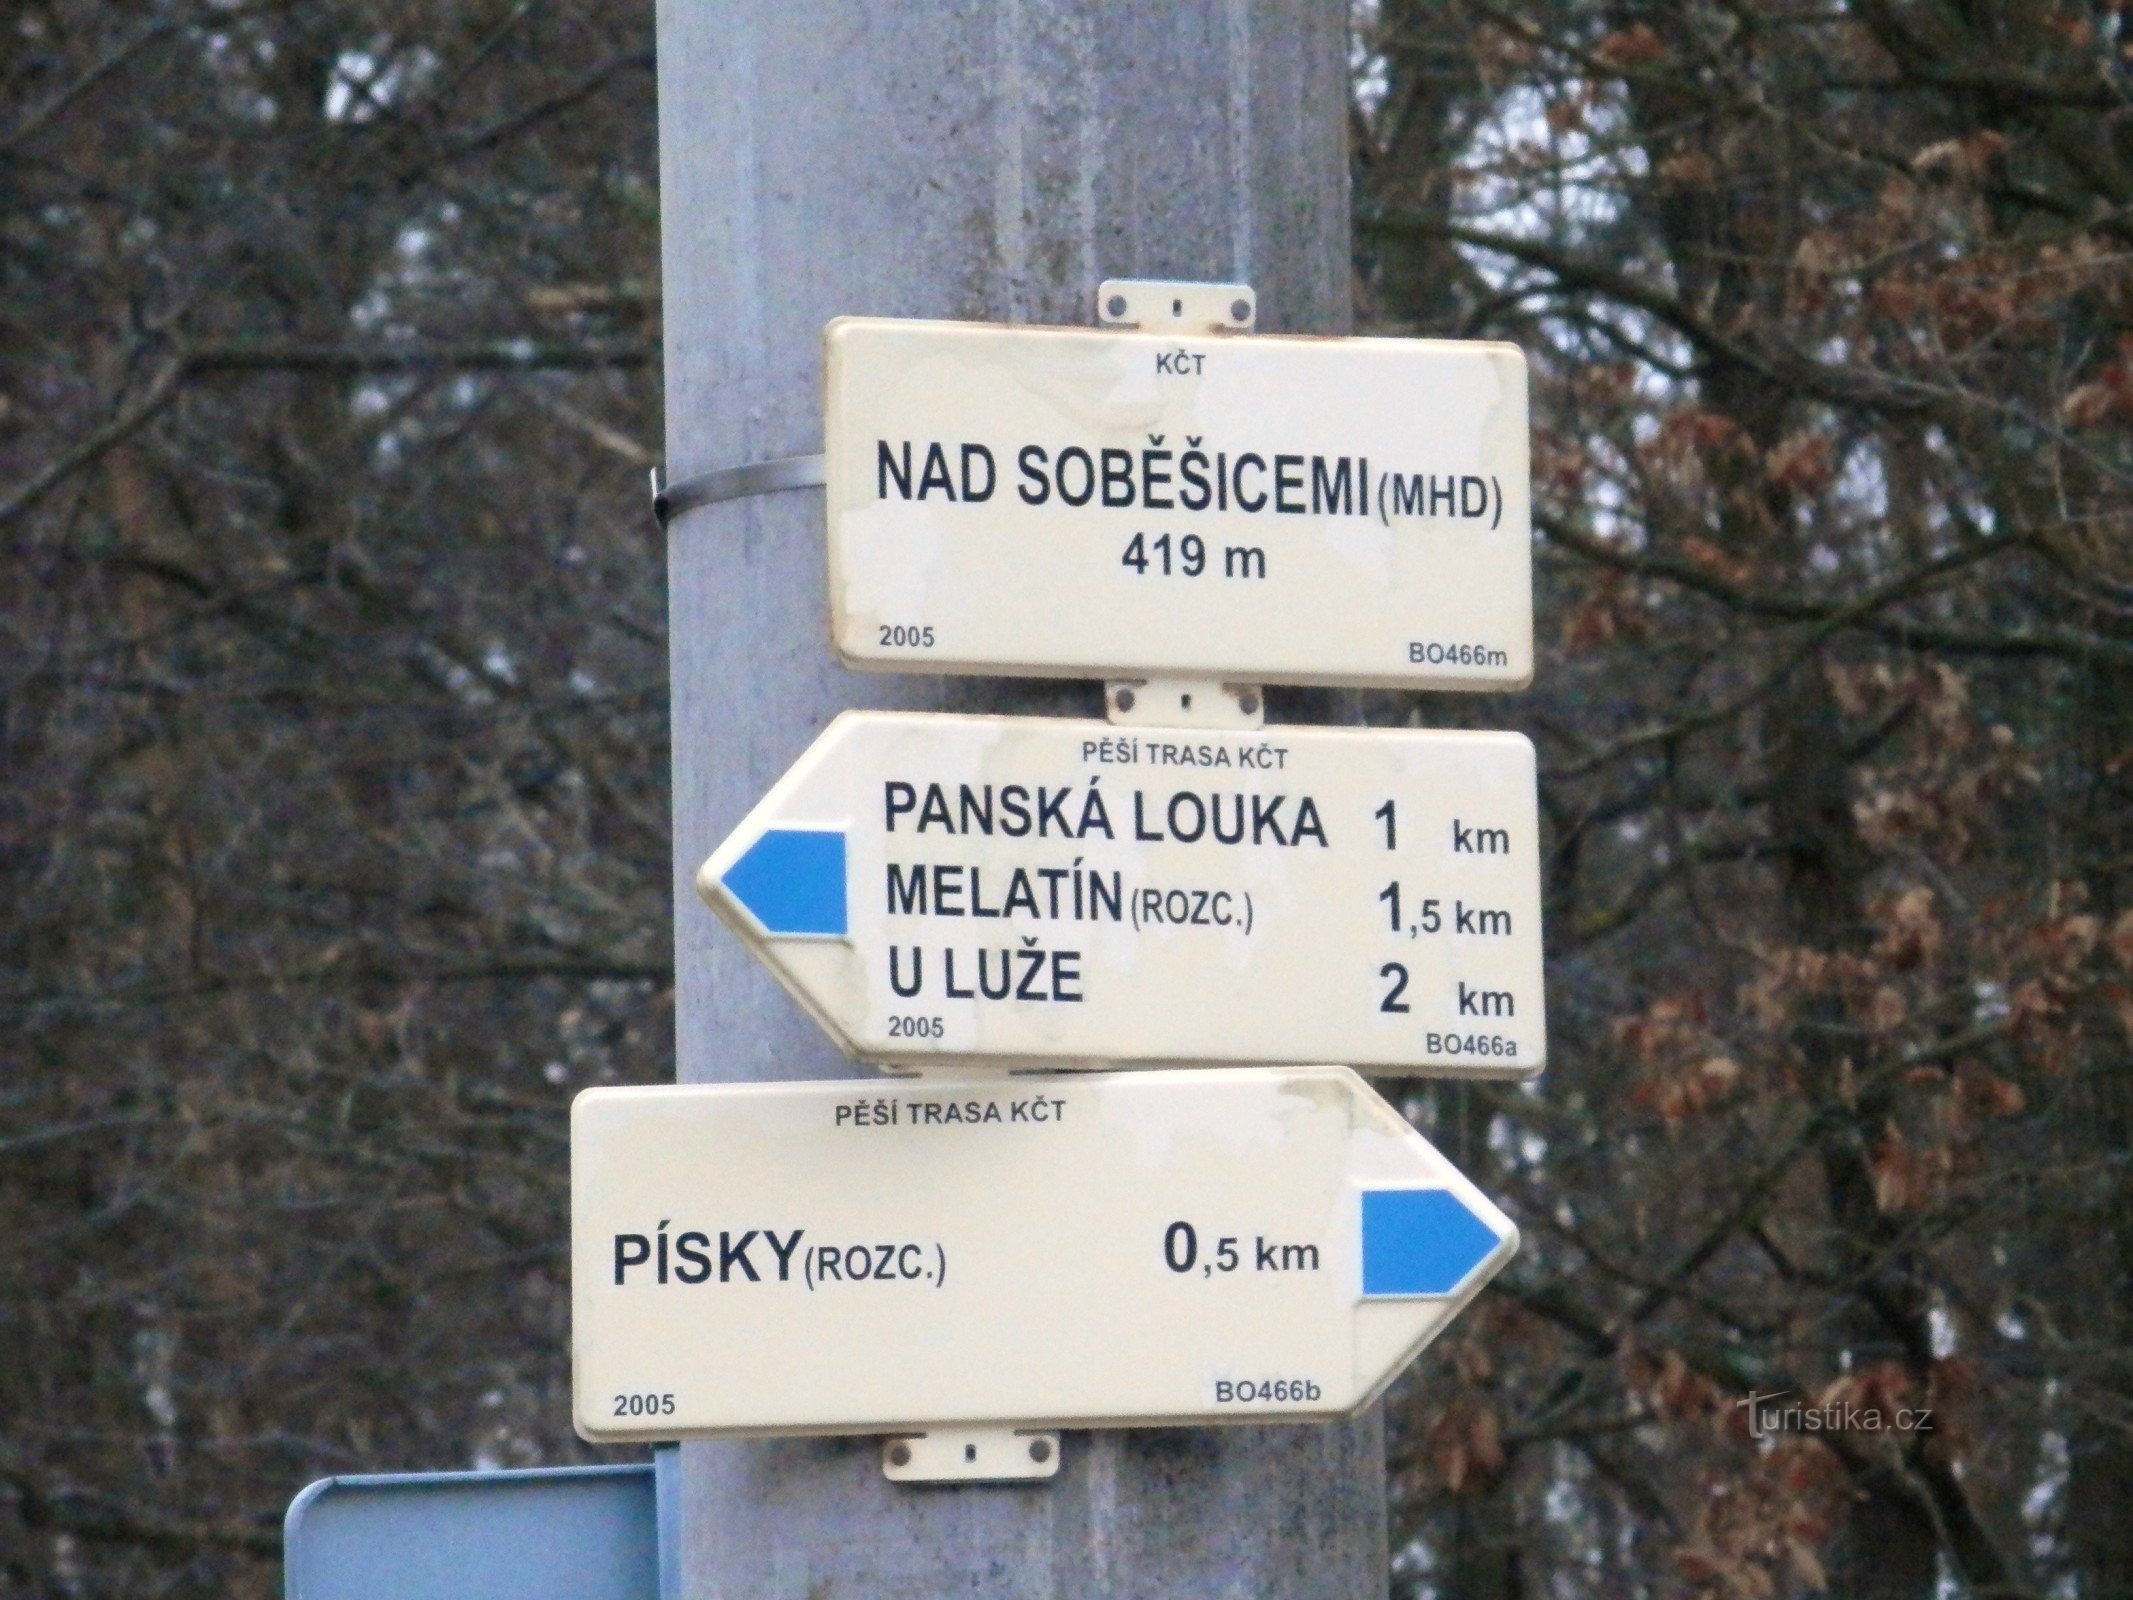 Nad Soběšicemi (public transport) - junction of marked tourist routes